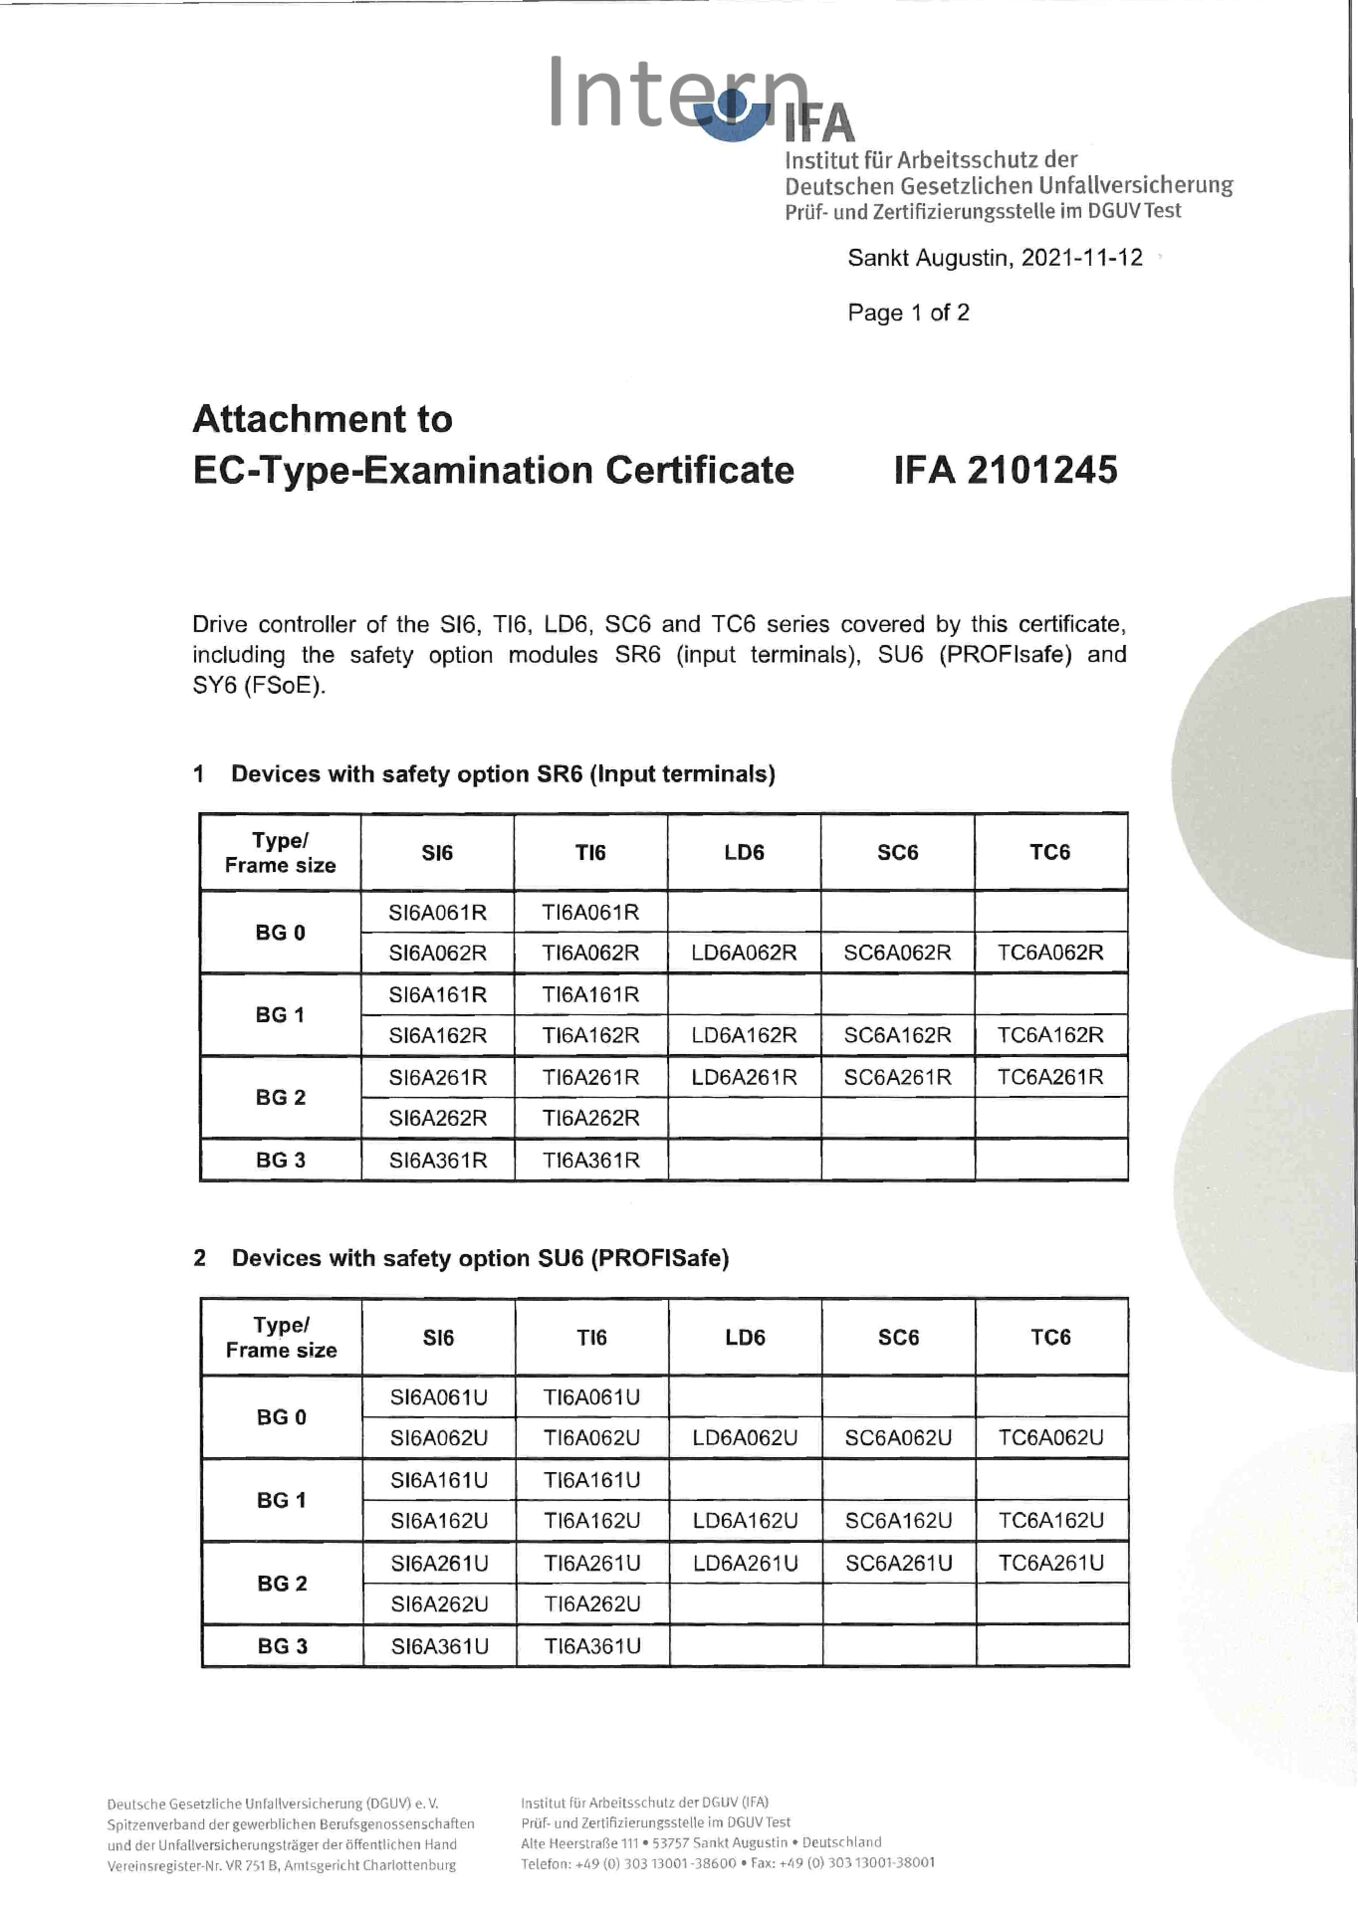 Attachment to EC-type examination certificate SC6 SI6